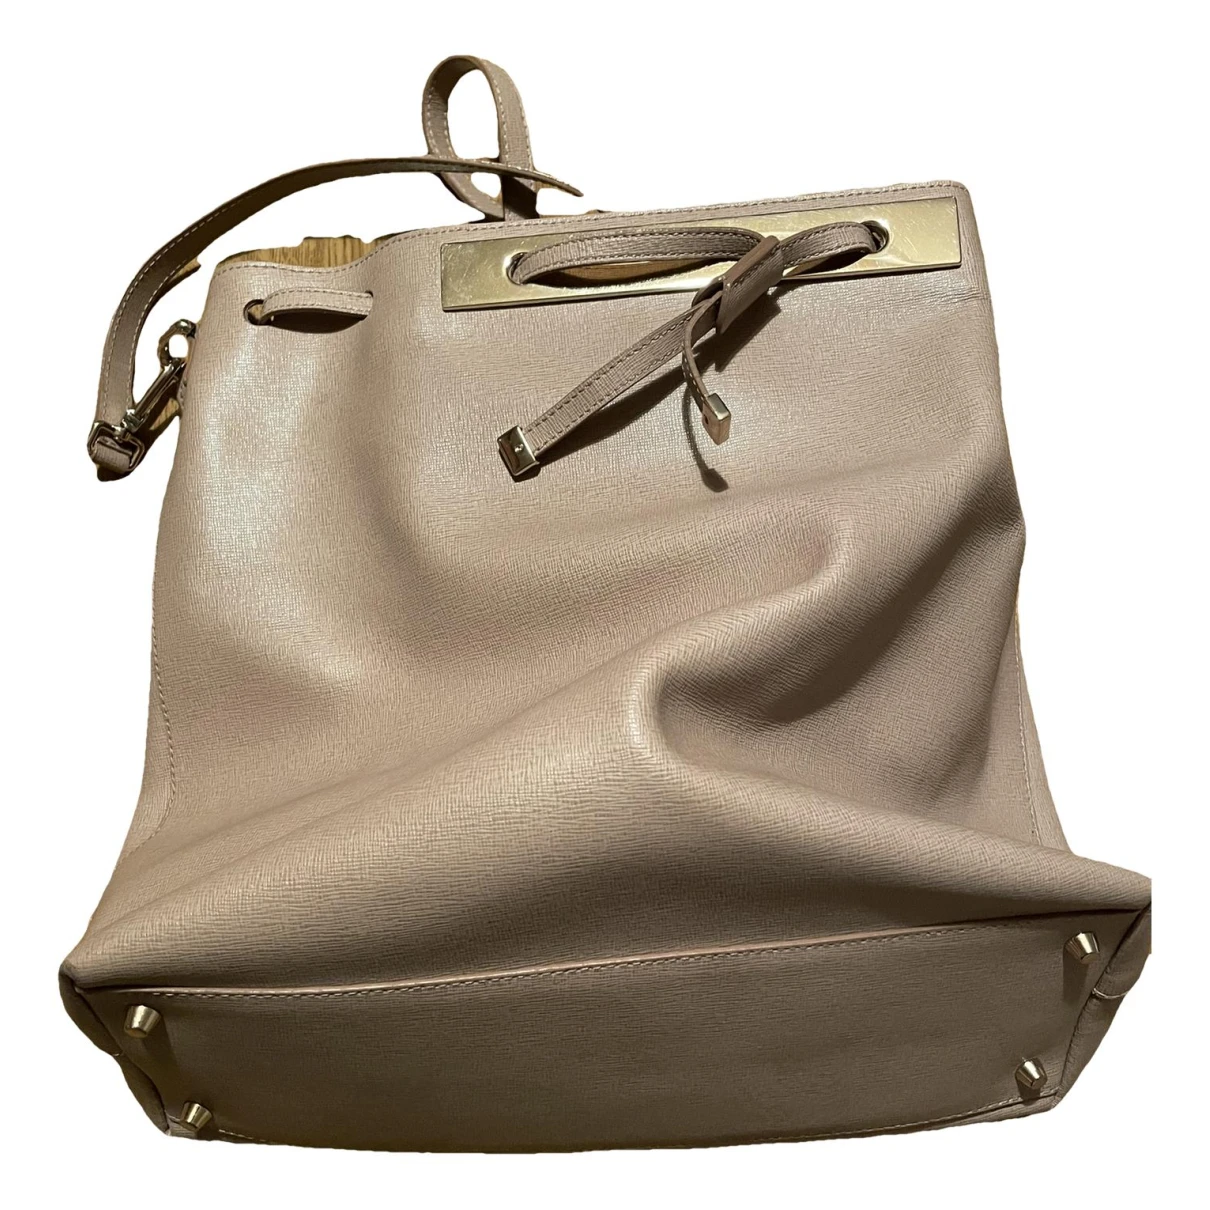 Pre-owned Furla Candy Bag Leather Handbag In Beige